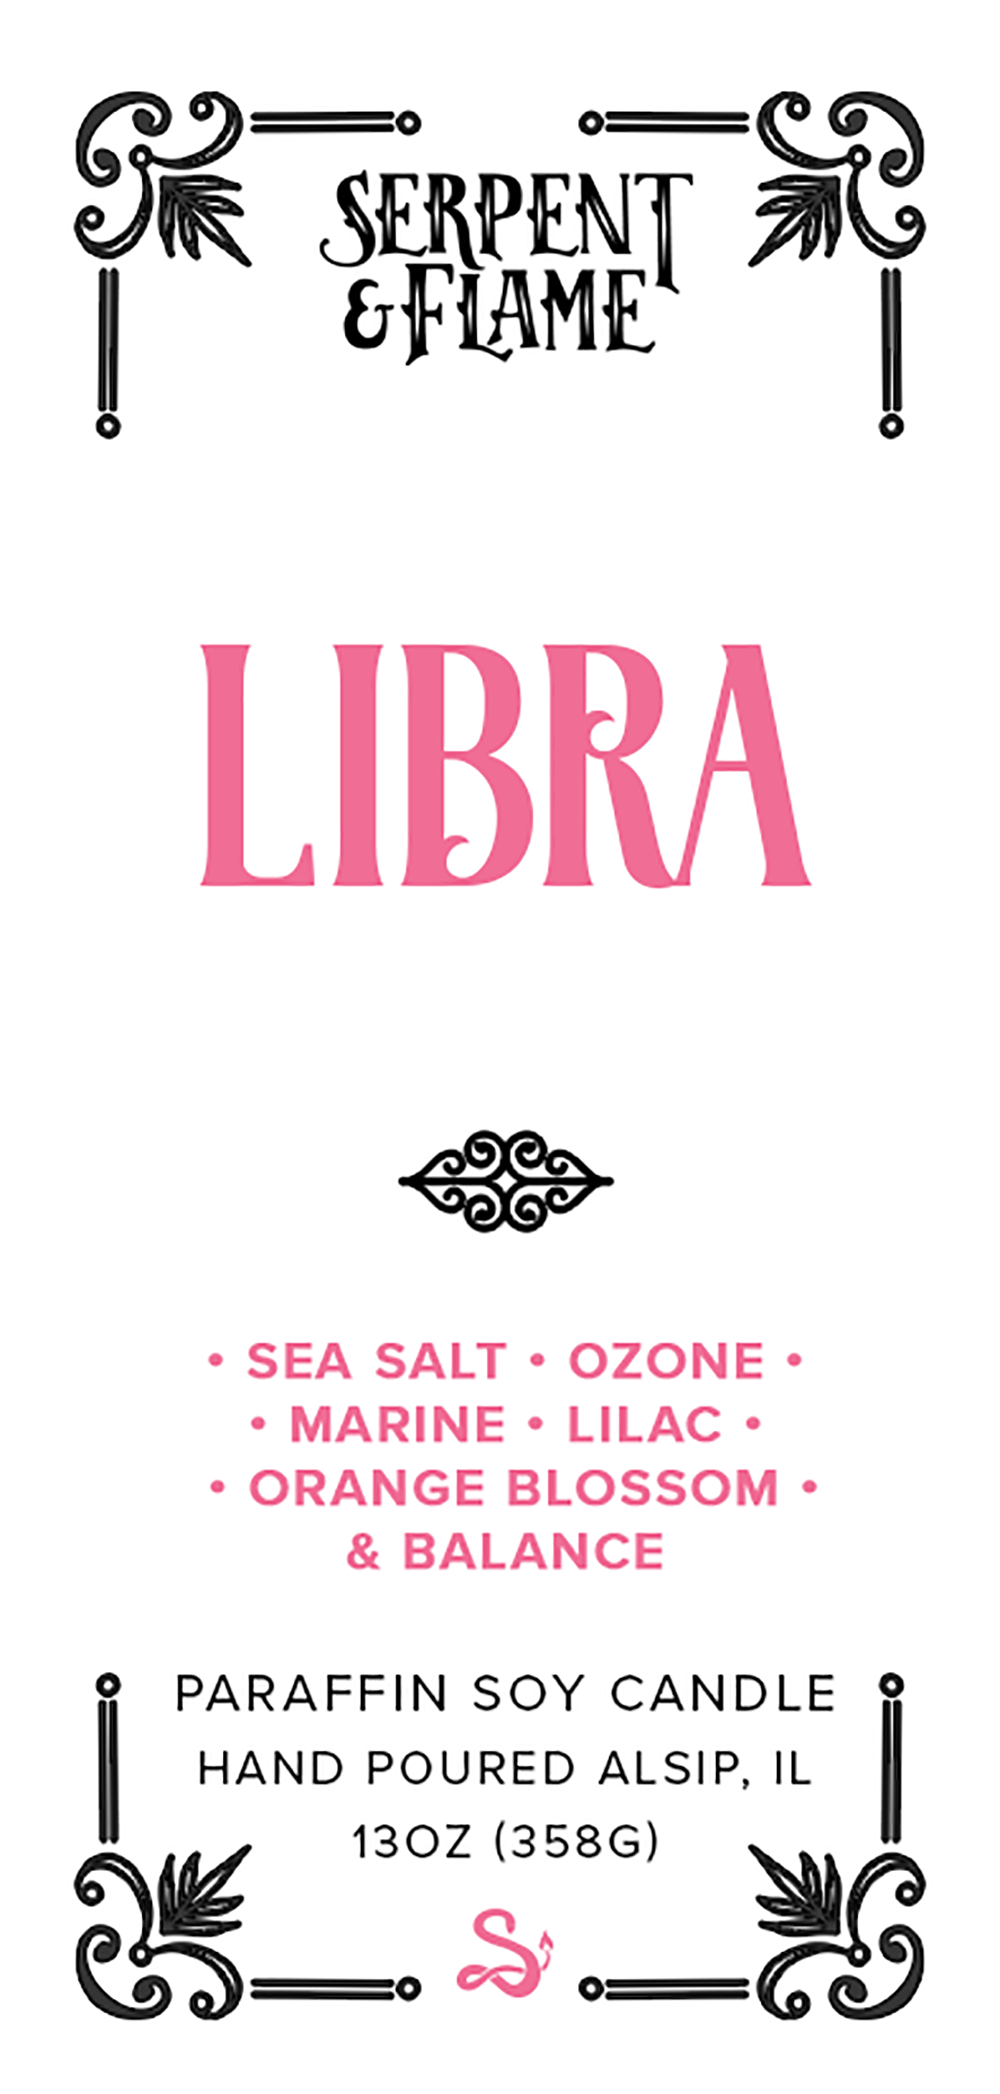 Zodiac Libra, Sea Salt Ozone